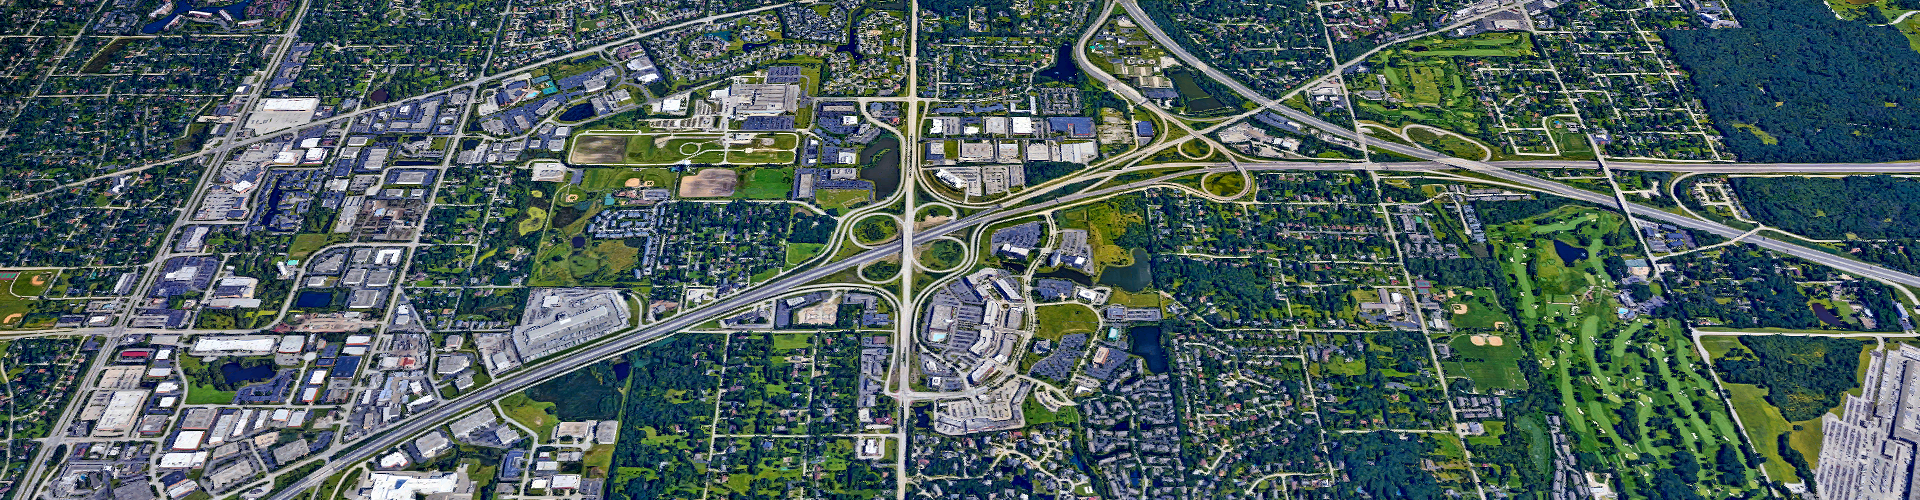 aerial view of roads in Burr Ridge, IL